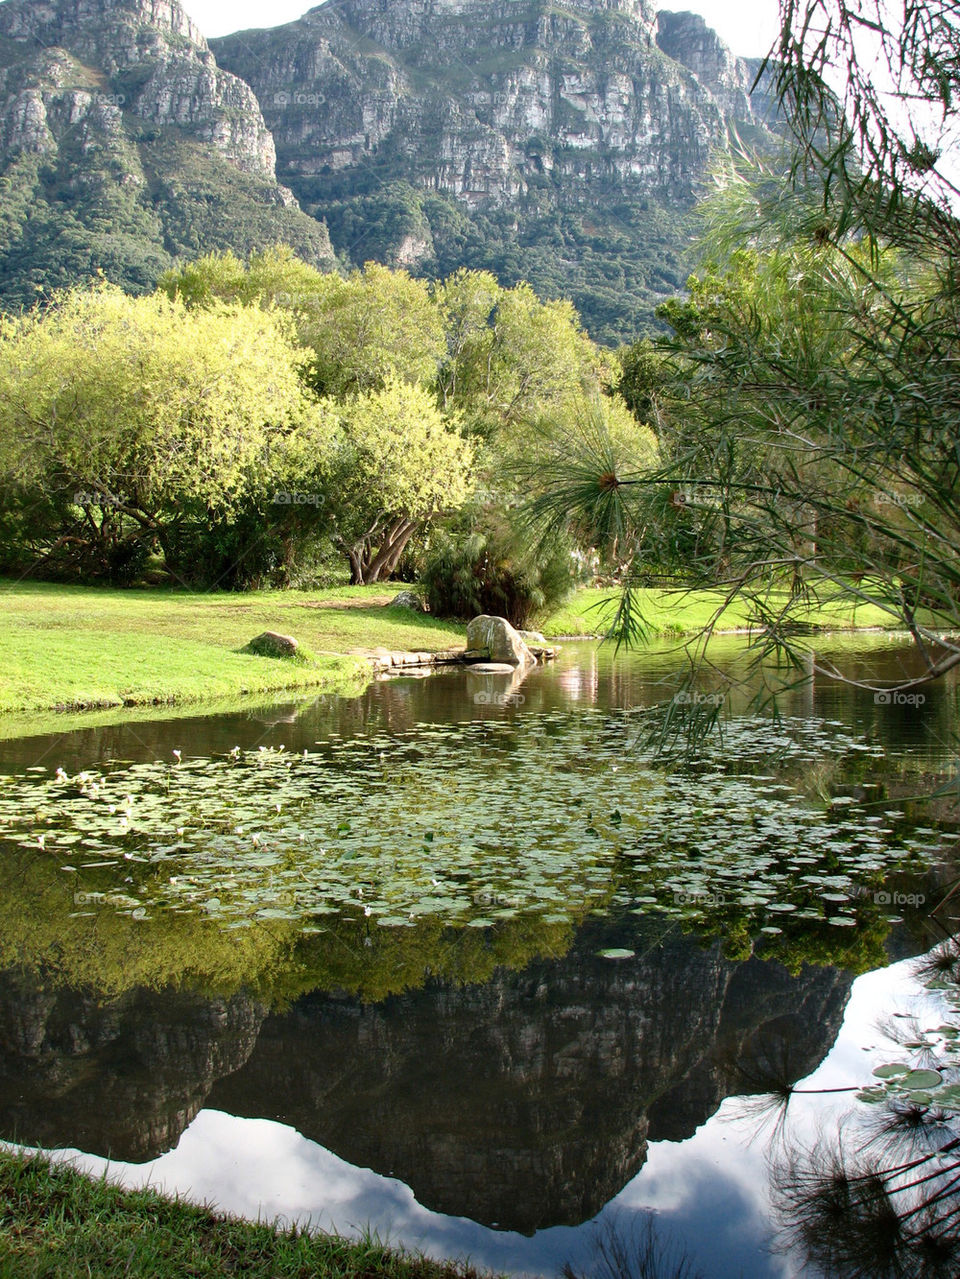 table mountain pond park by gatordukie